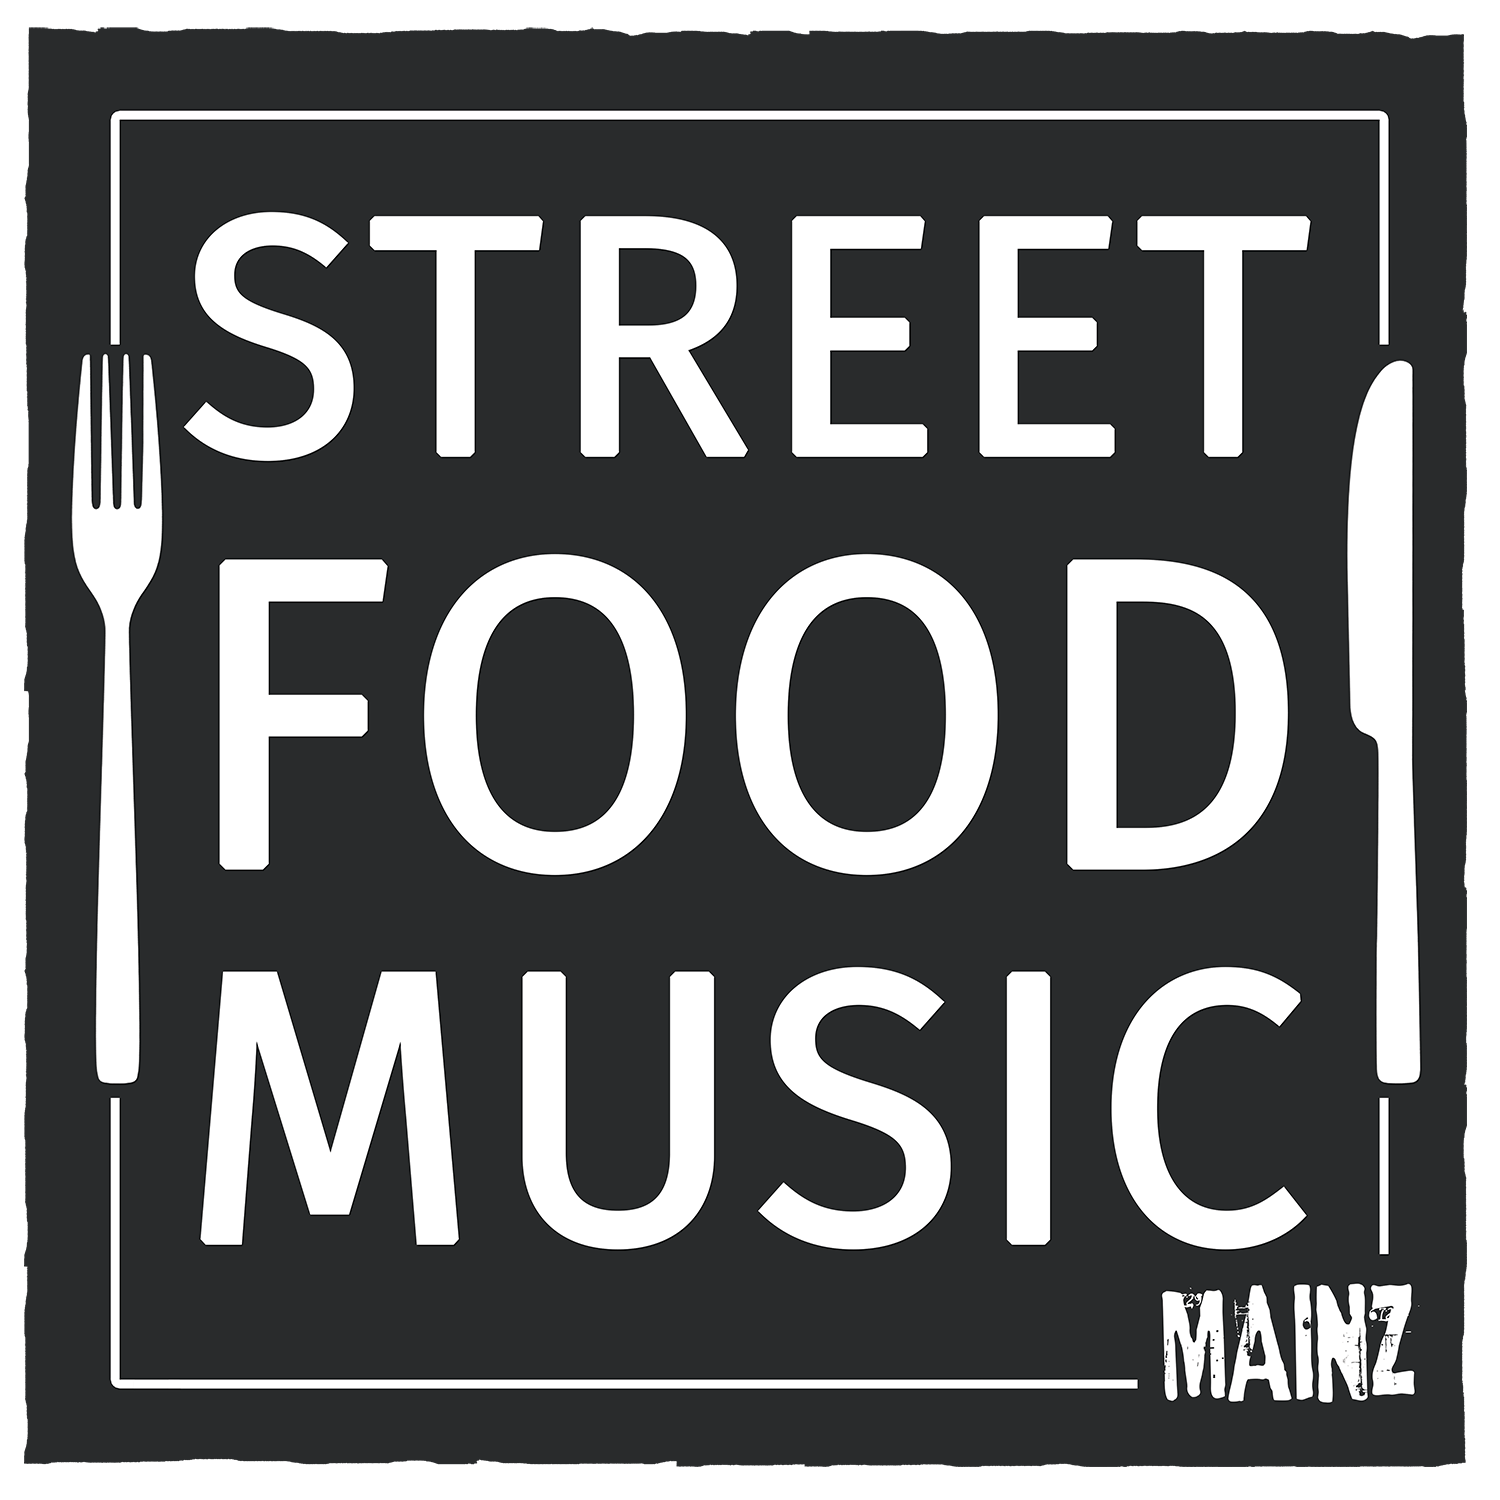 Street Food & Music Festival Mainz